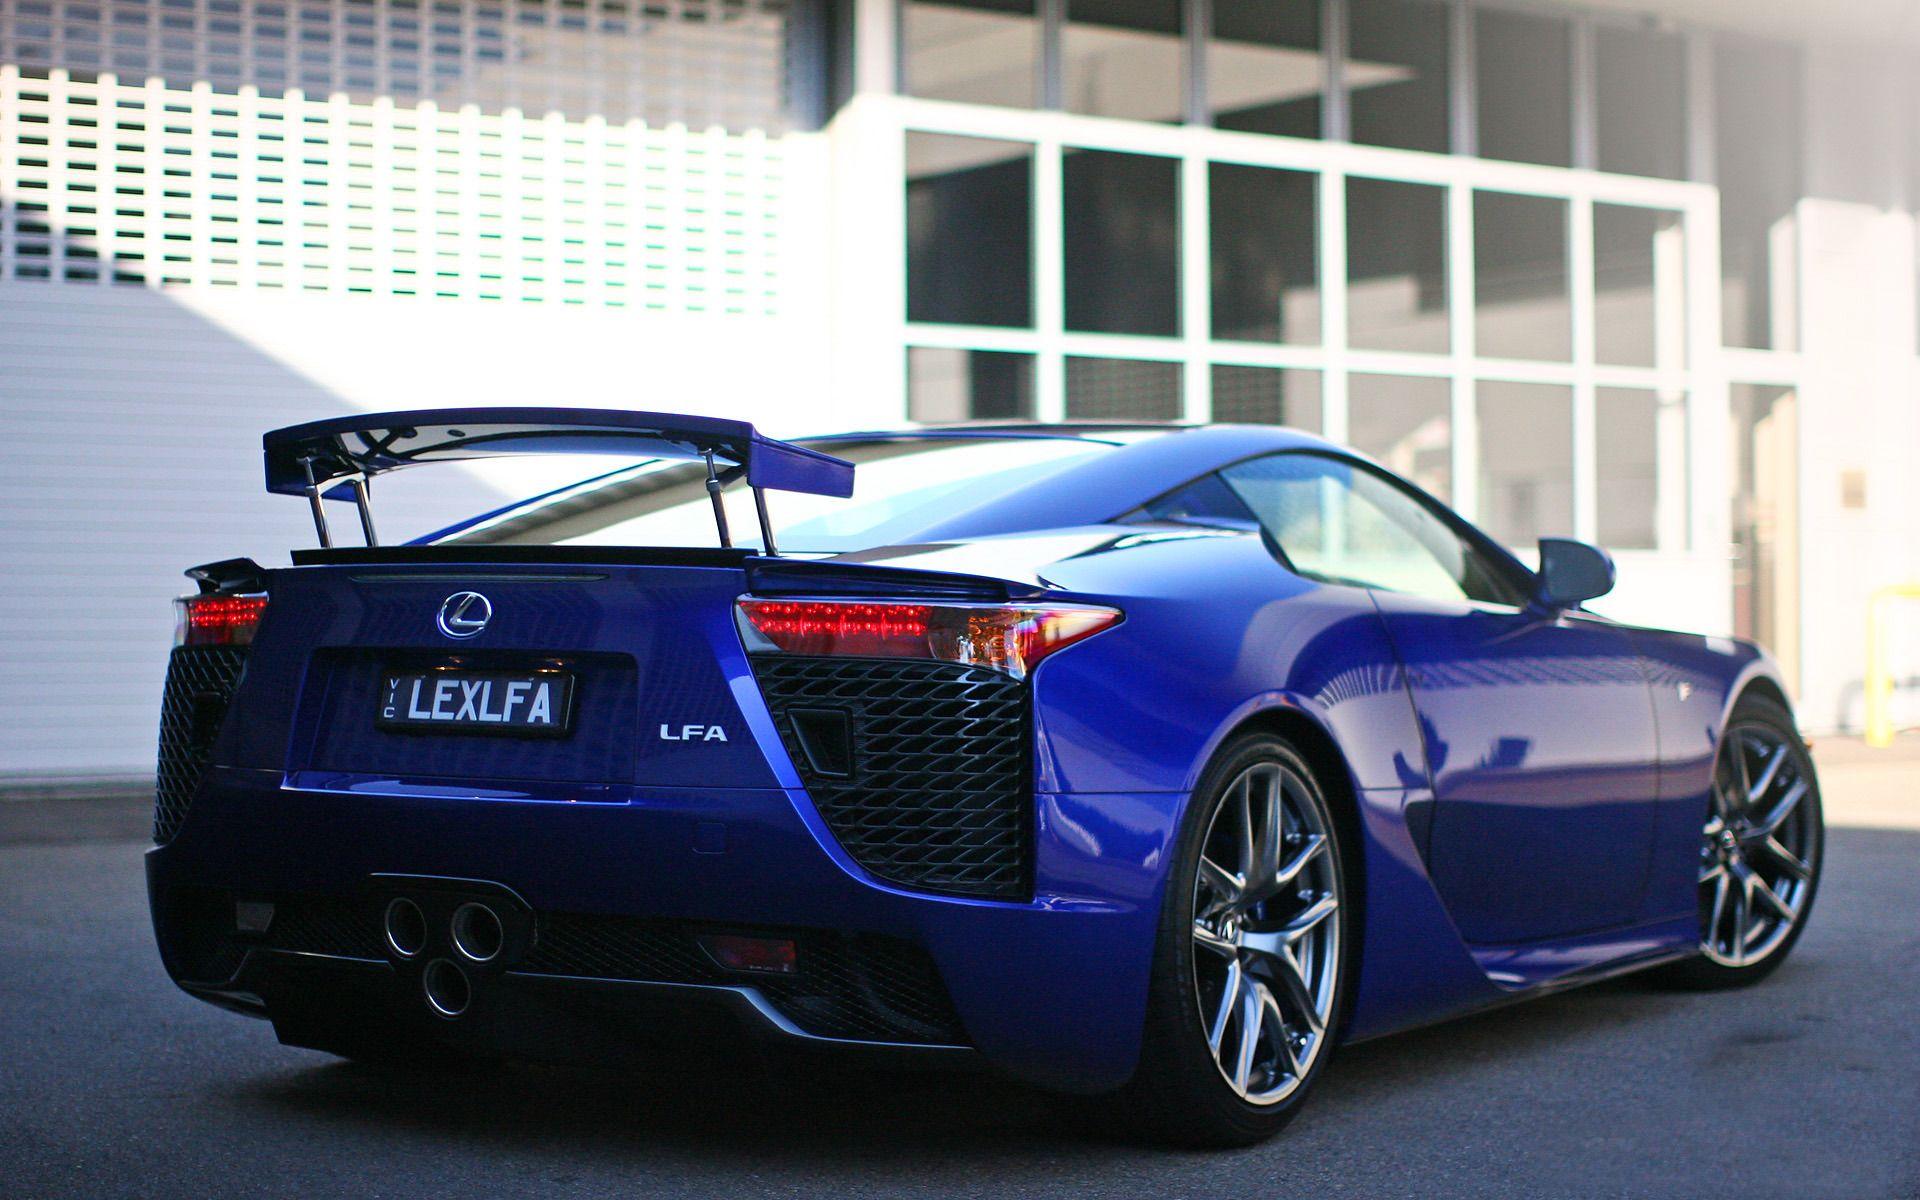 Lexus Lfa Car Hd Wallpaper Blue. Cars Wallpaper, Picture